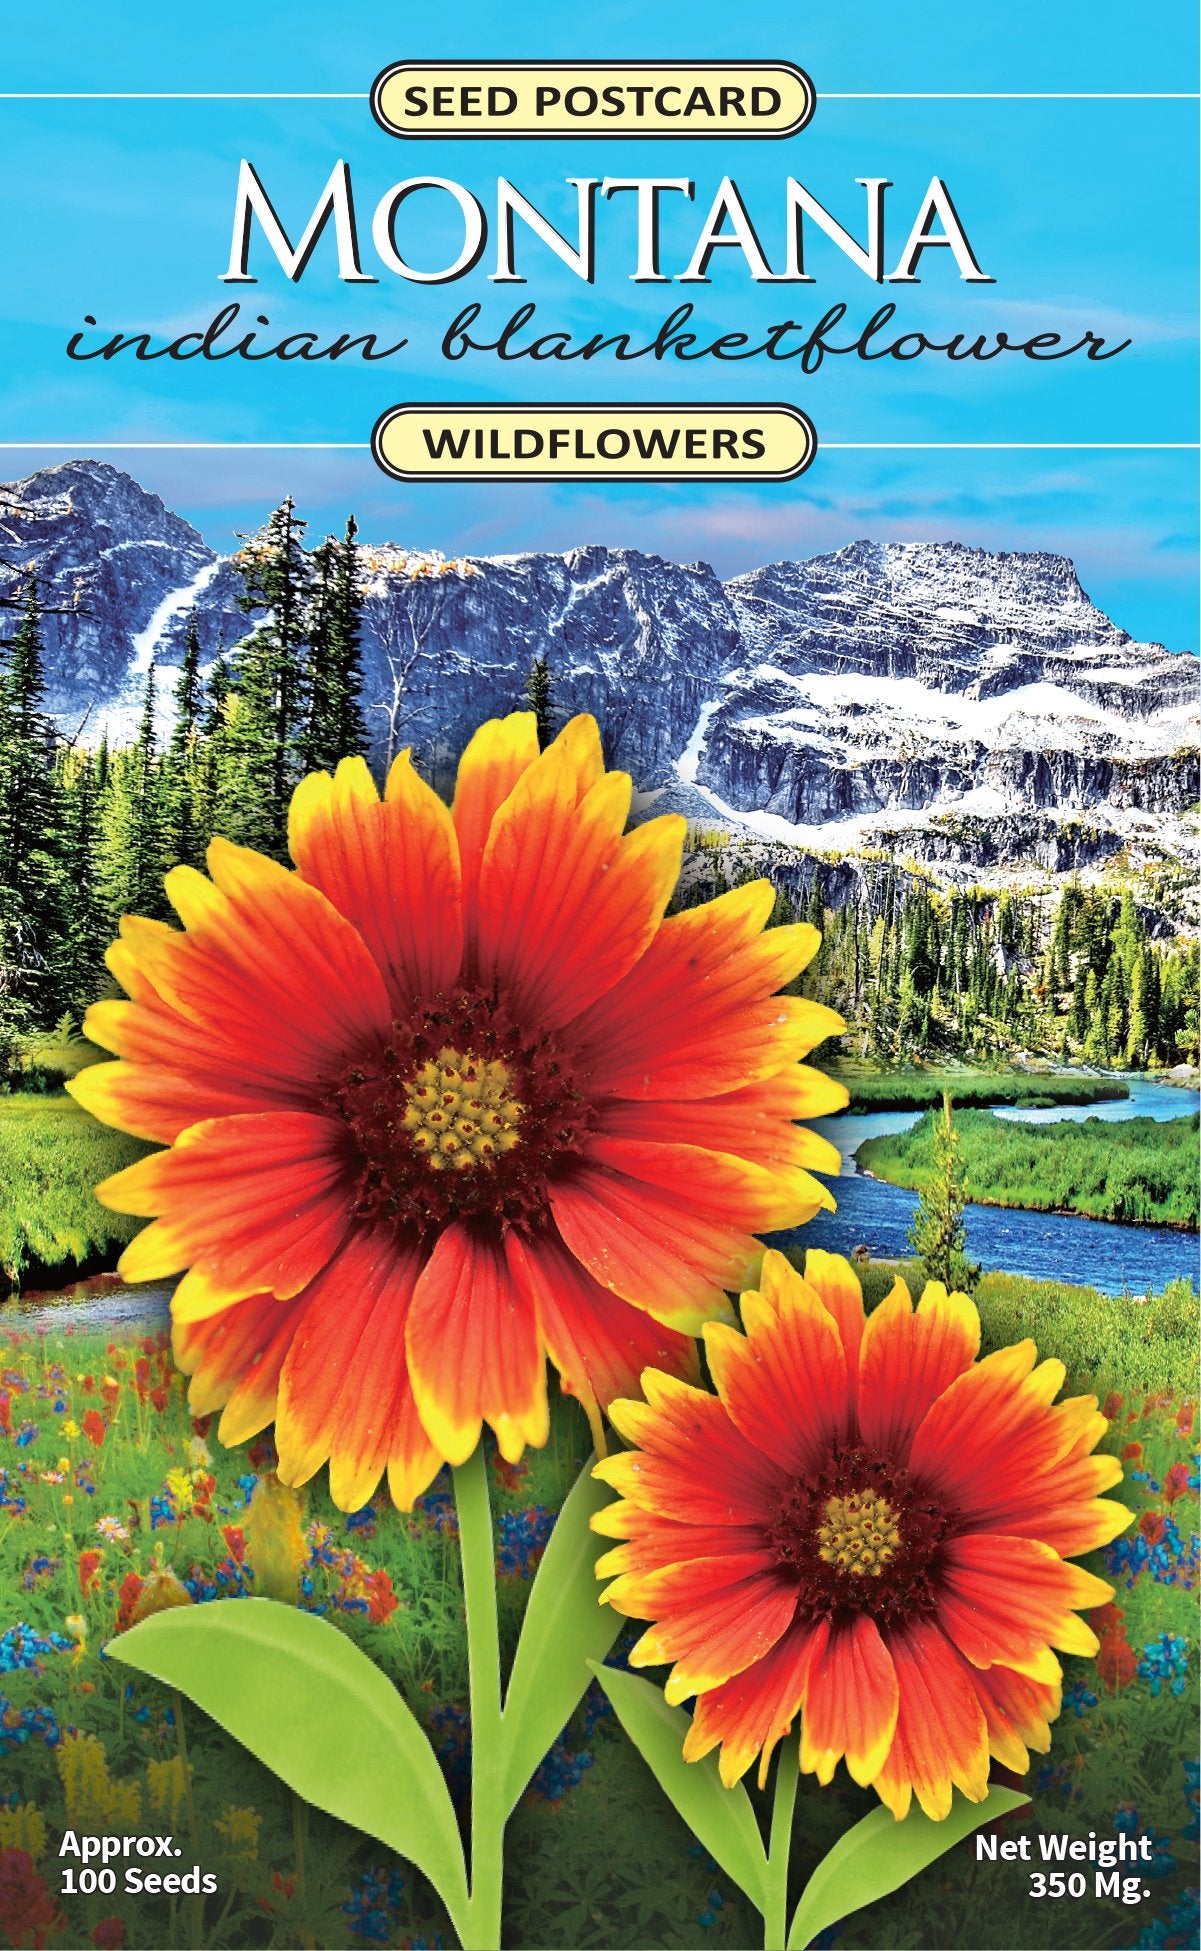 Montana Indian Blanketflower Seed Packet